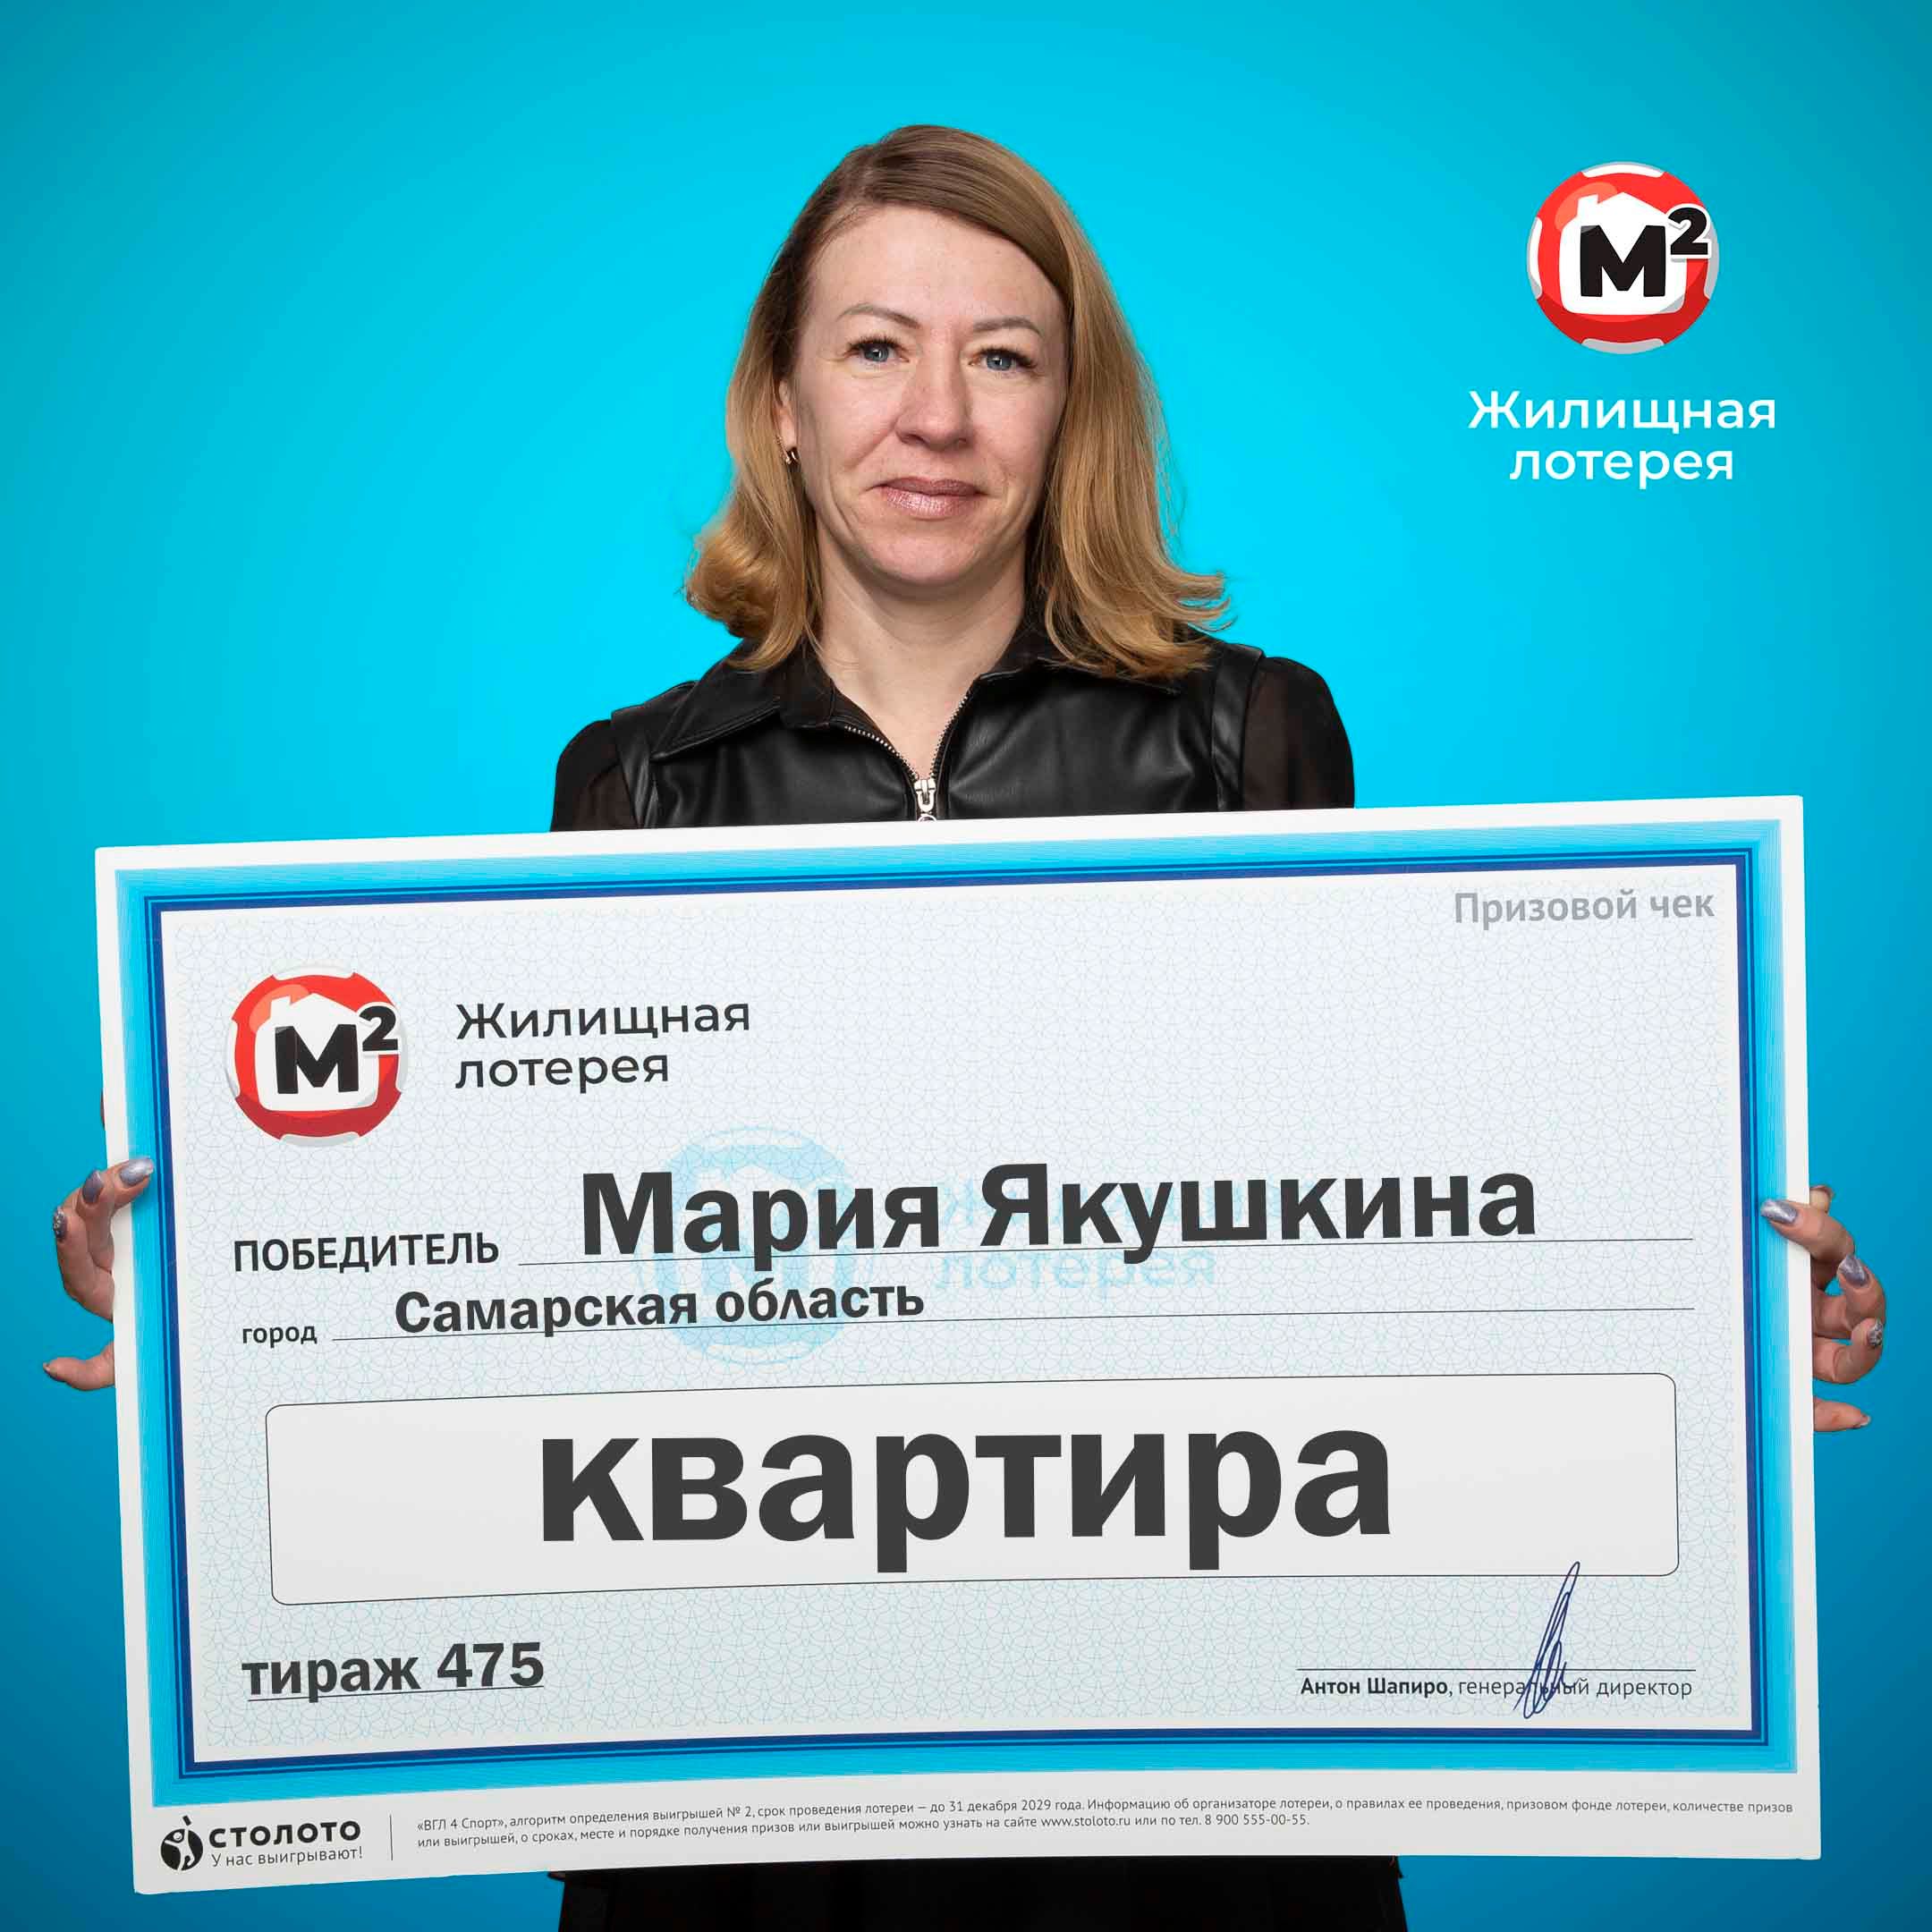 Мария Якушкина